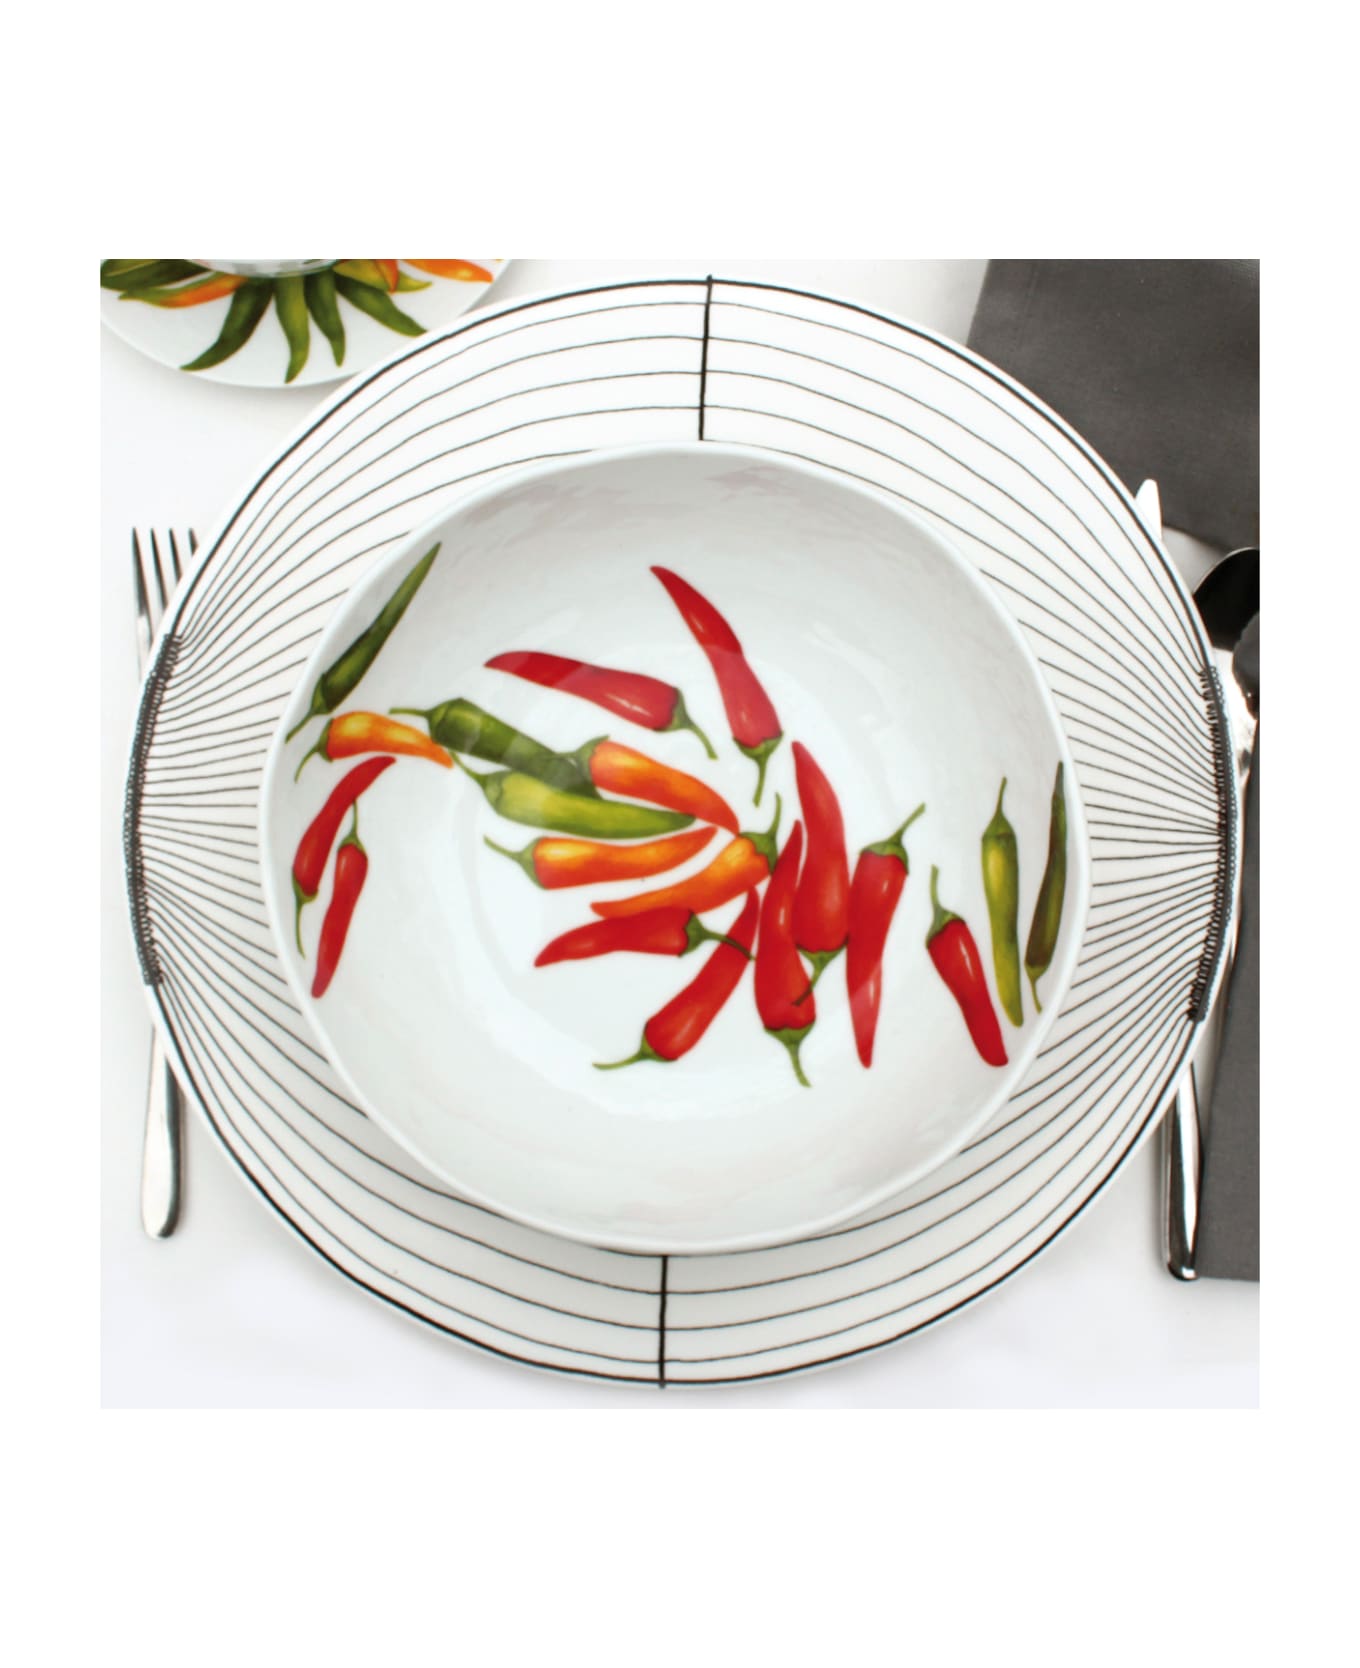 Taitù Medium Bowl PEPERONCINI - Dieta Mediterranea Vegetables Collection - Red